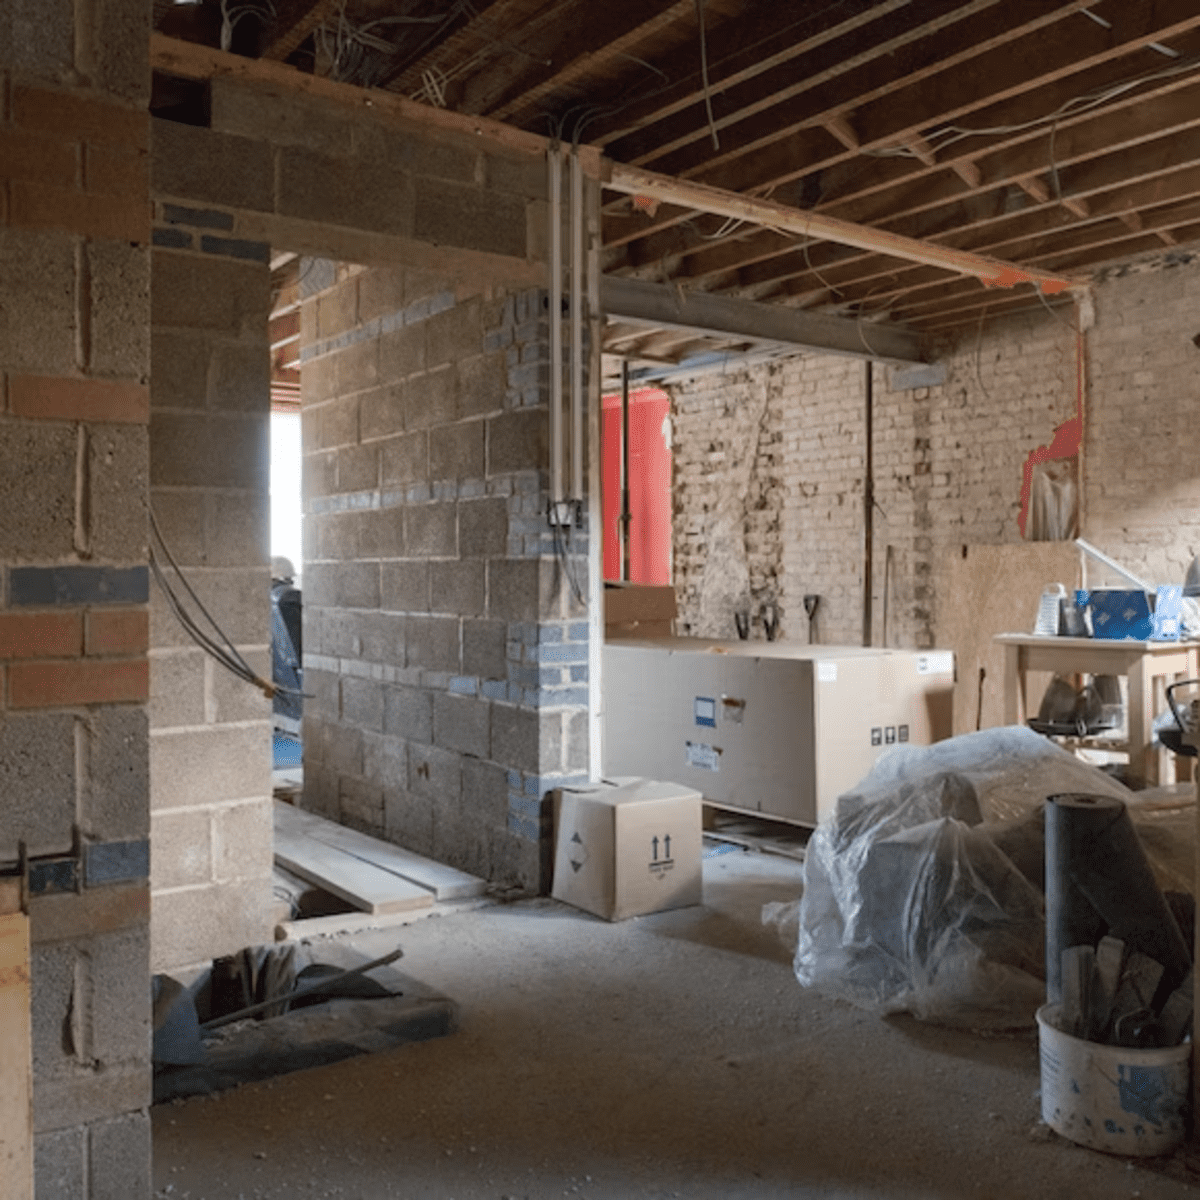 Basement Storage Ideas: Organizing A Texas-Sized Basement